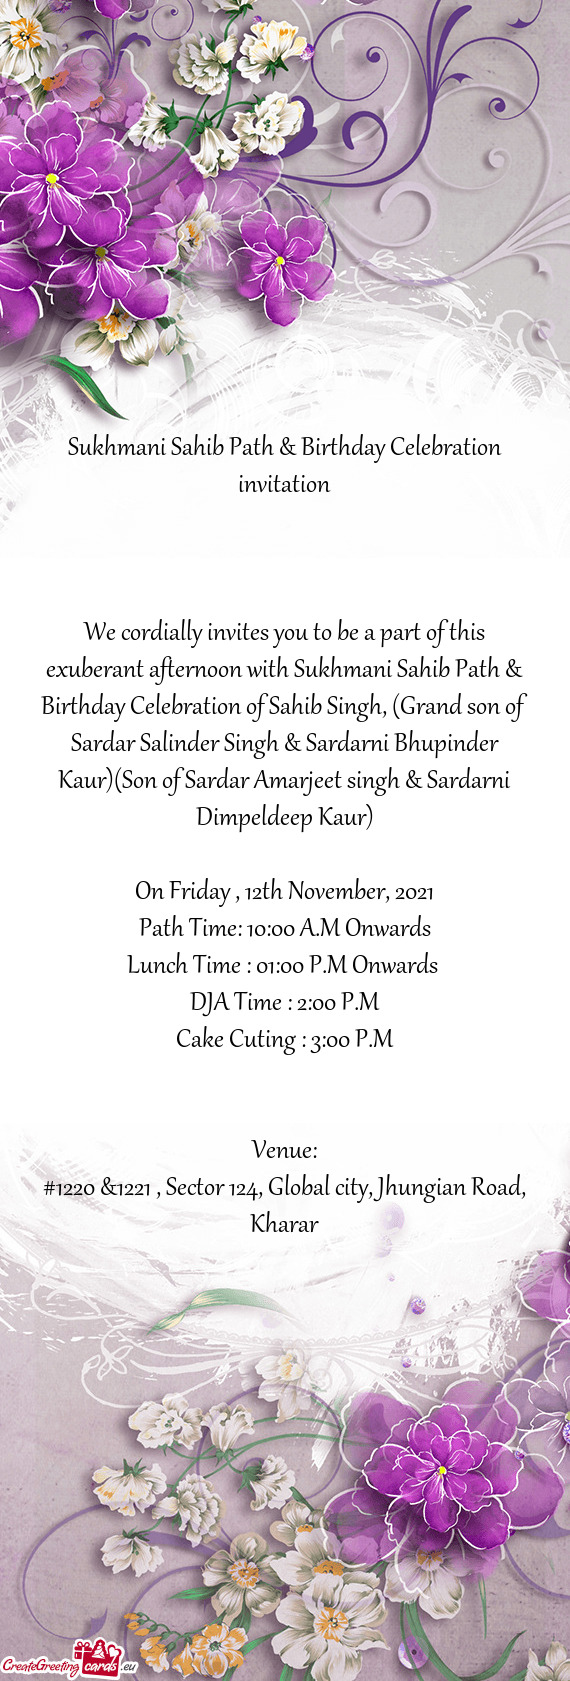 Y Celebration of Sahib Singh, (Grand son of Sardar Salinder Singh & Sardarni Bhupinder Kaur)(Son of